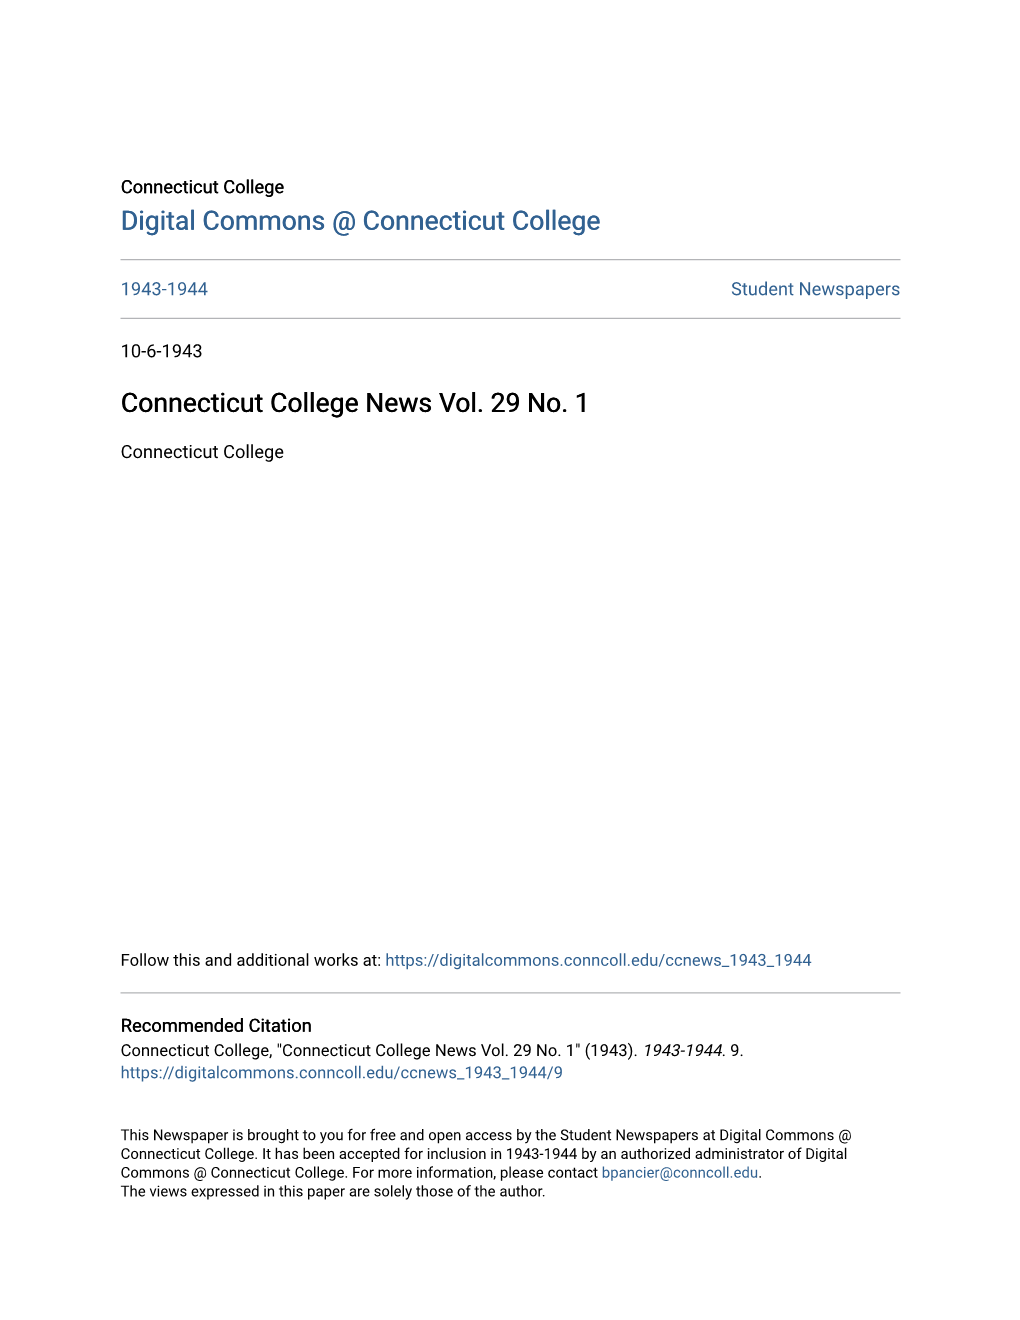 Connecticut College News Vol. 29 No. 1